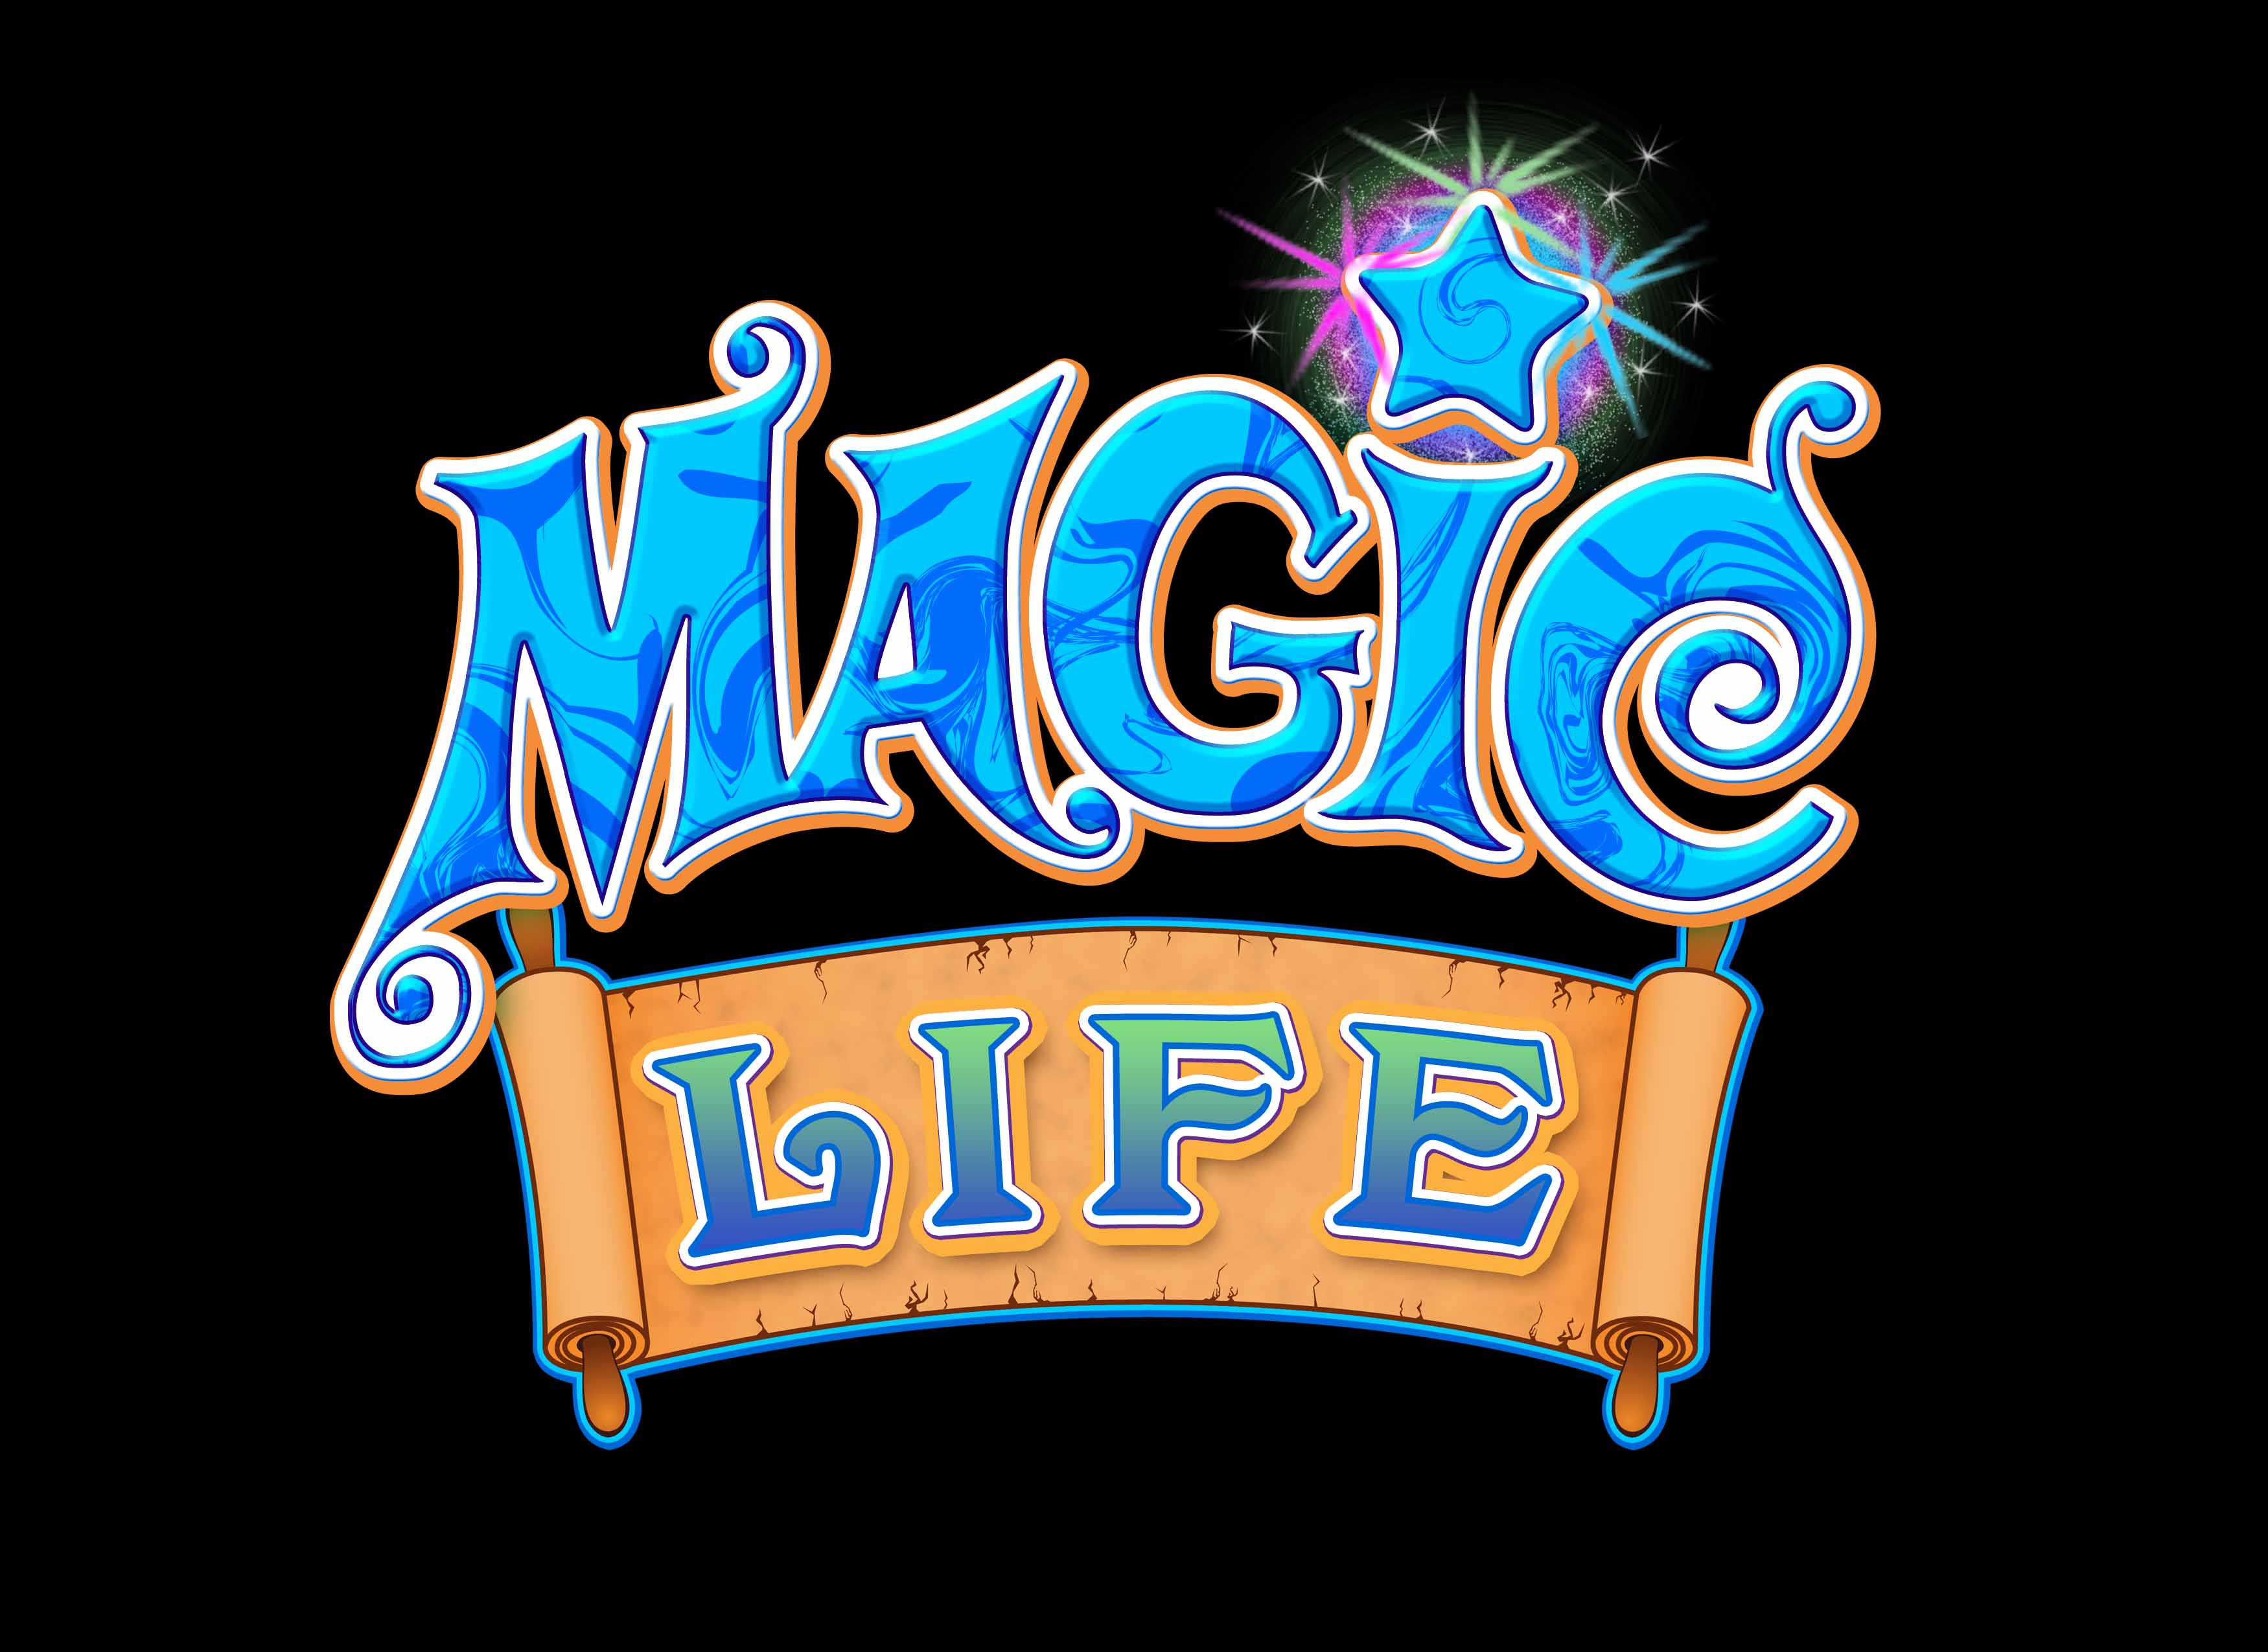 Life is magic